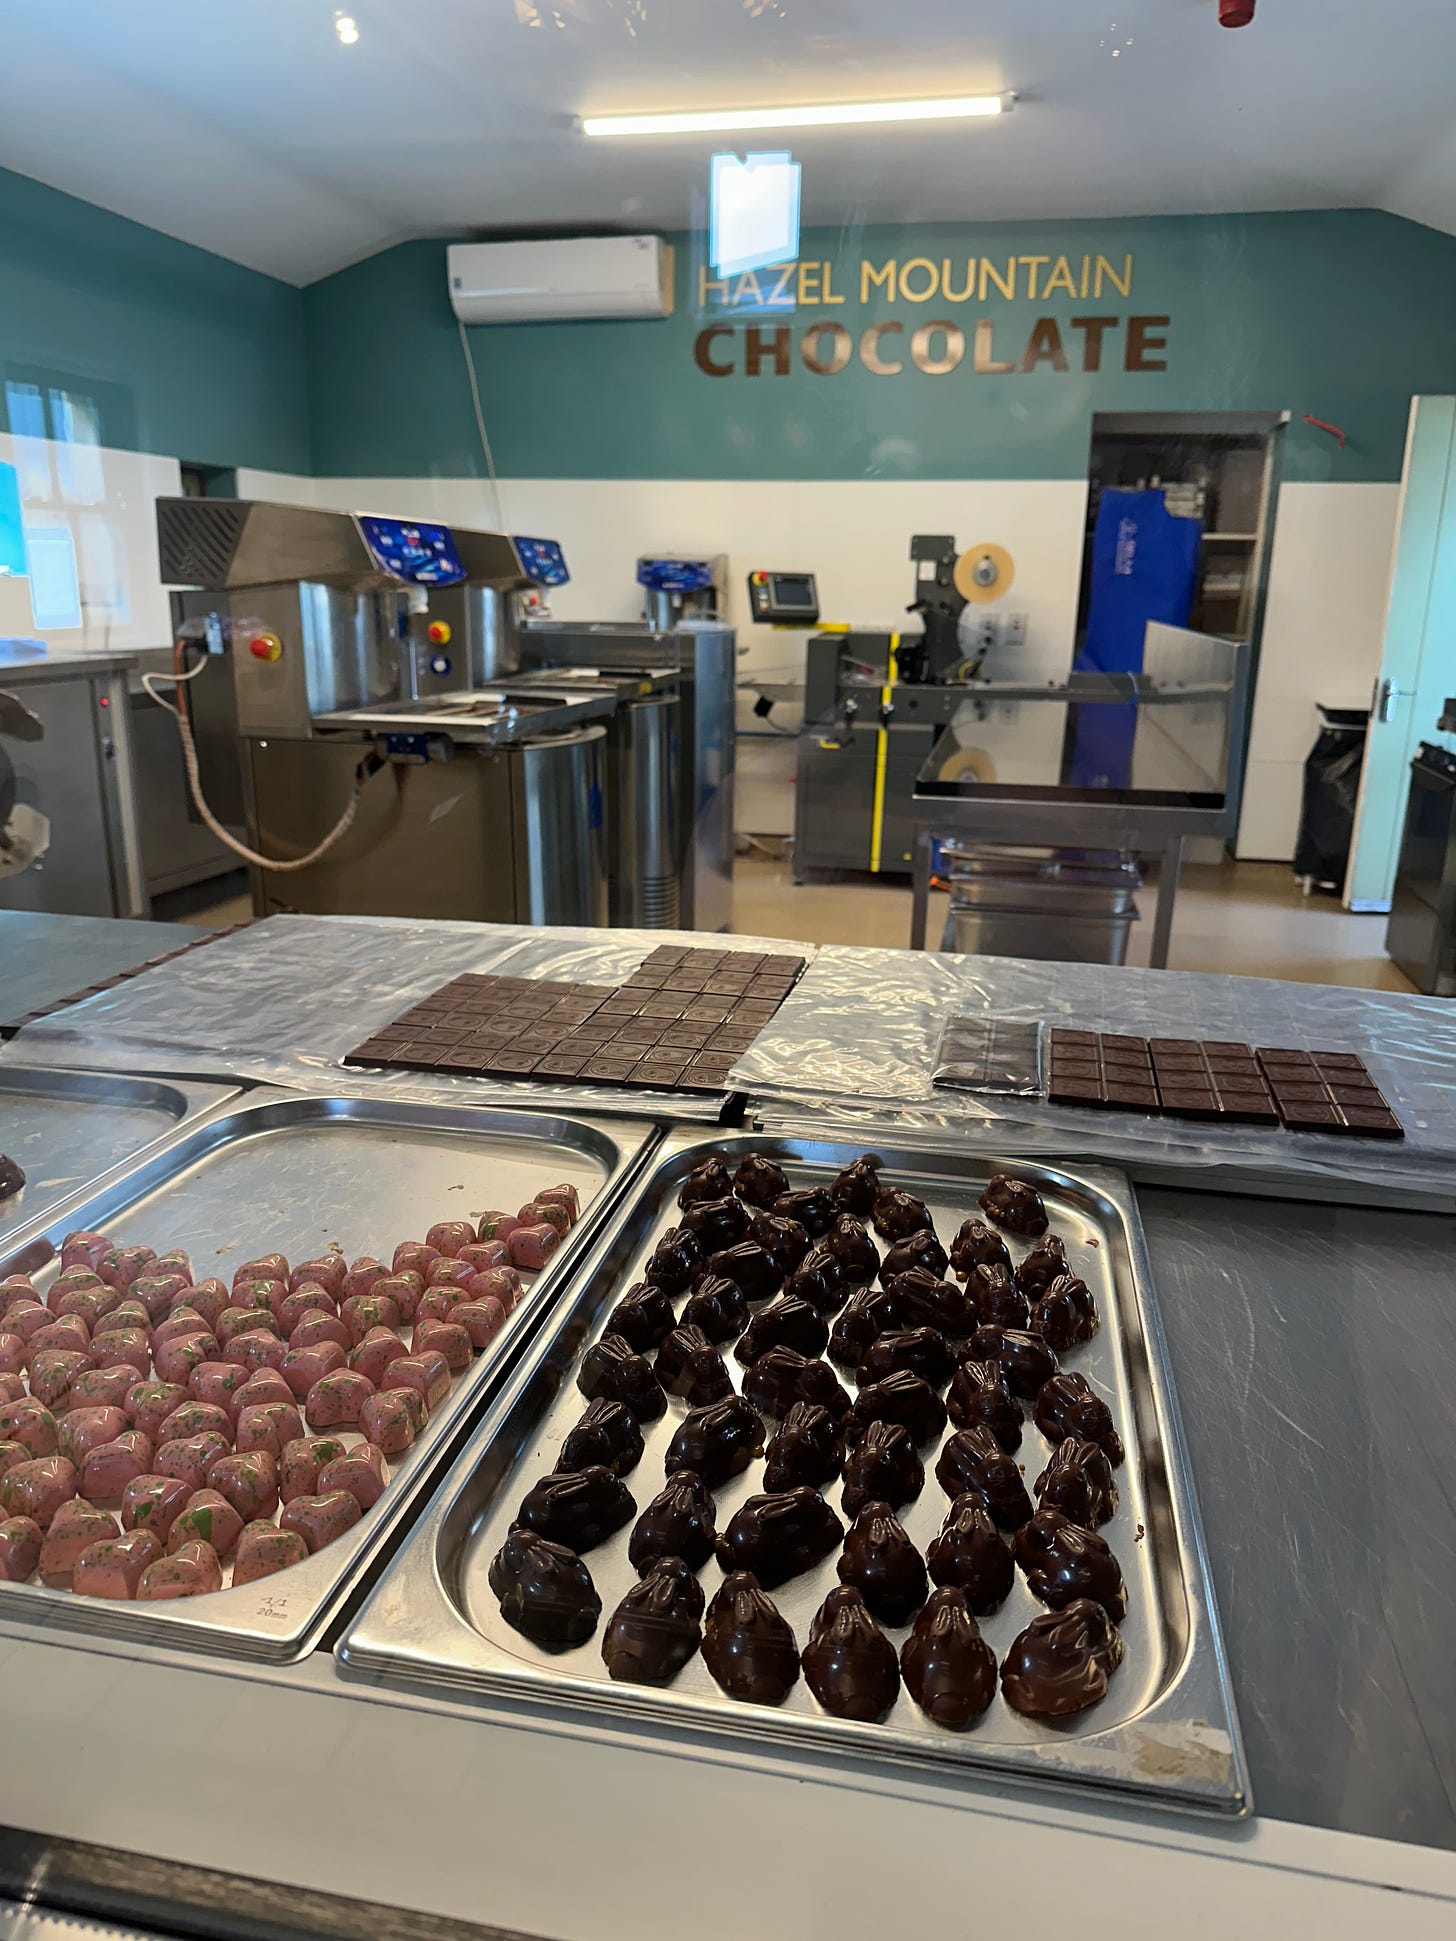 Production at Hazel Mountain Chocolate